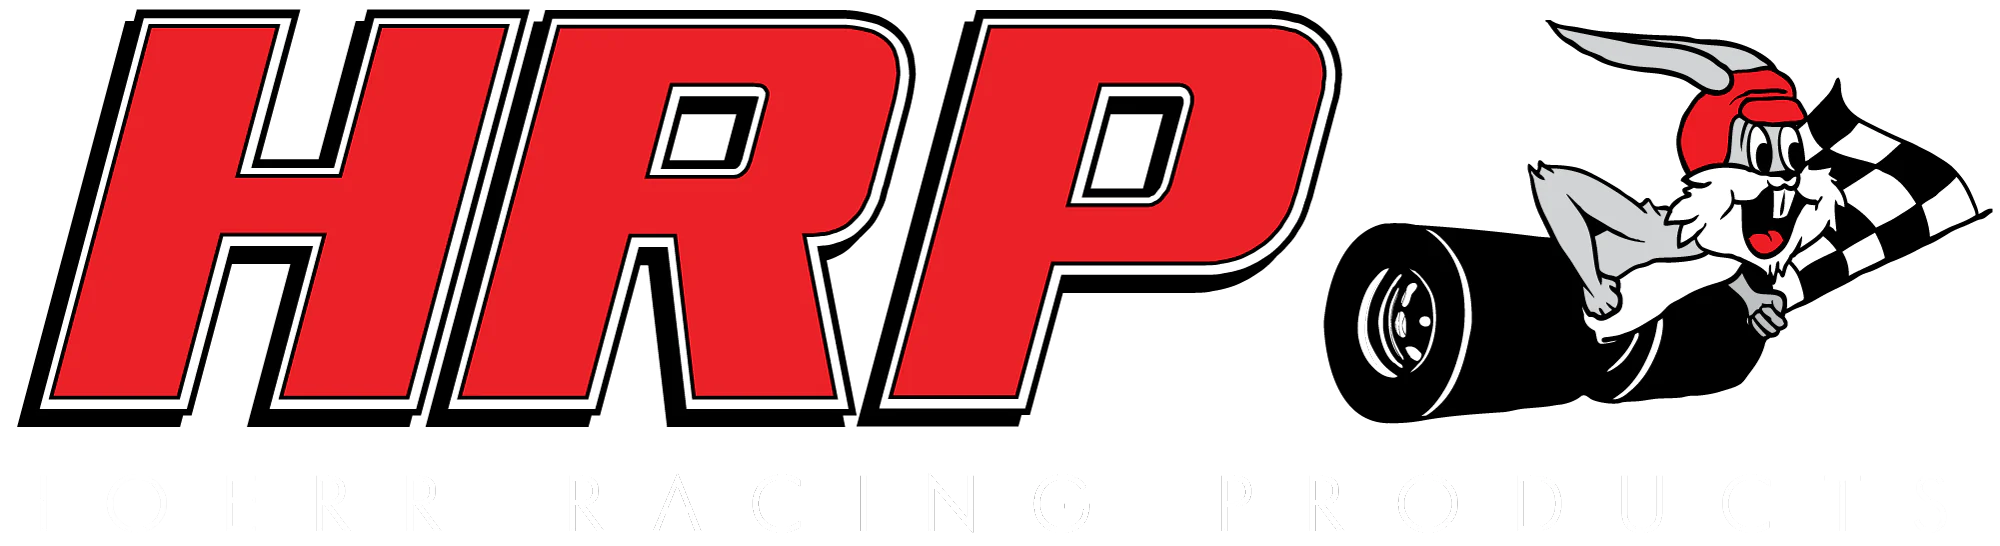 HRP logo